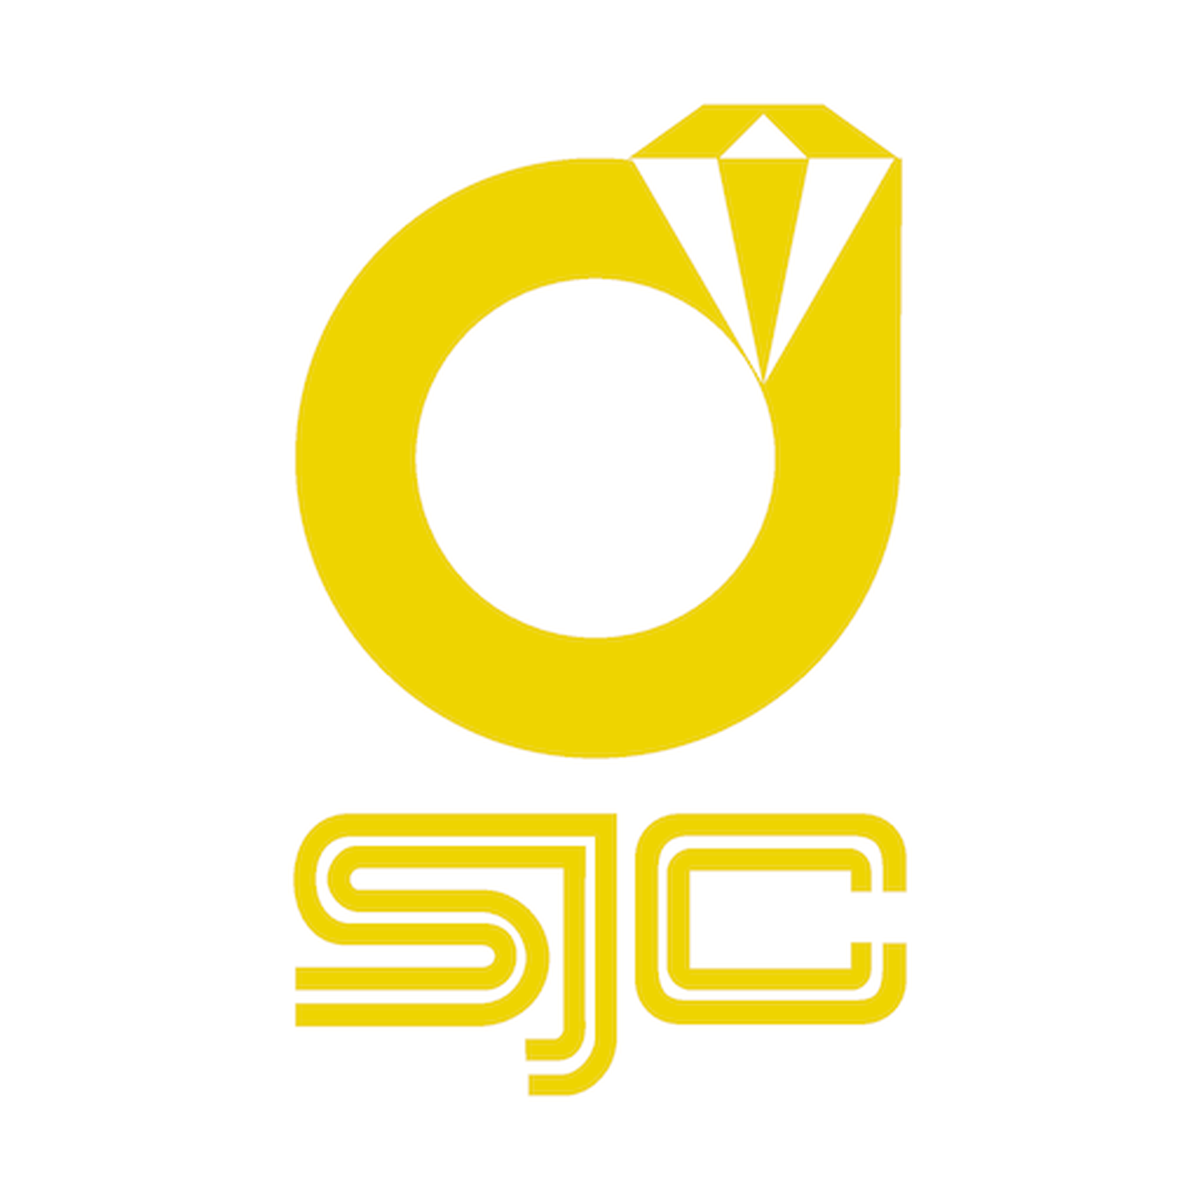 SJC Emblem – St. Joseph's College for Women